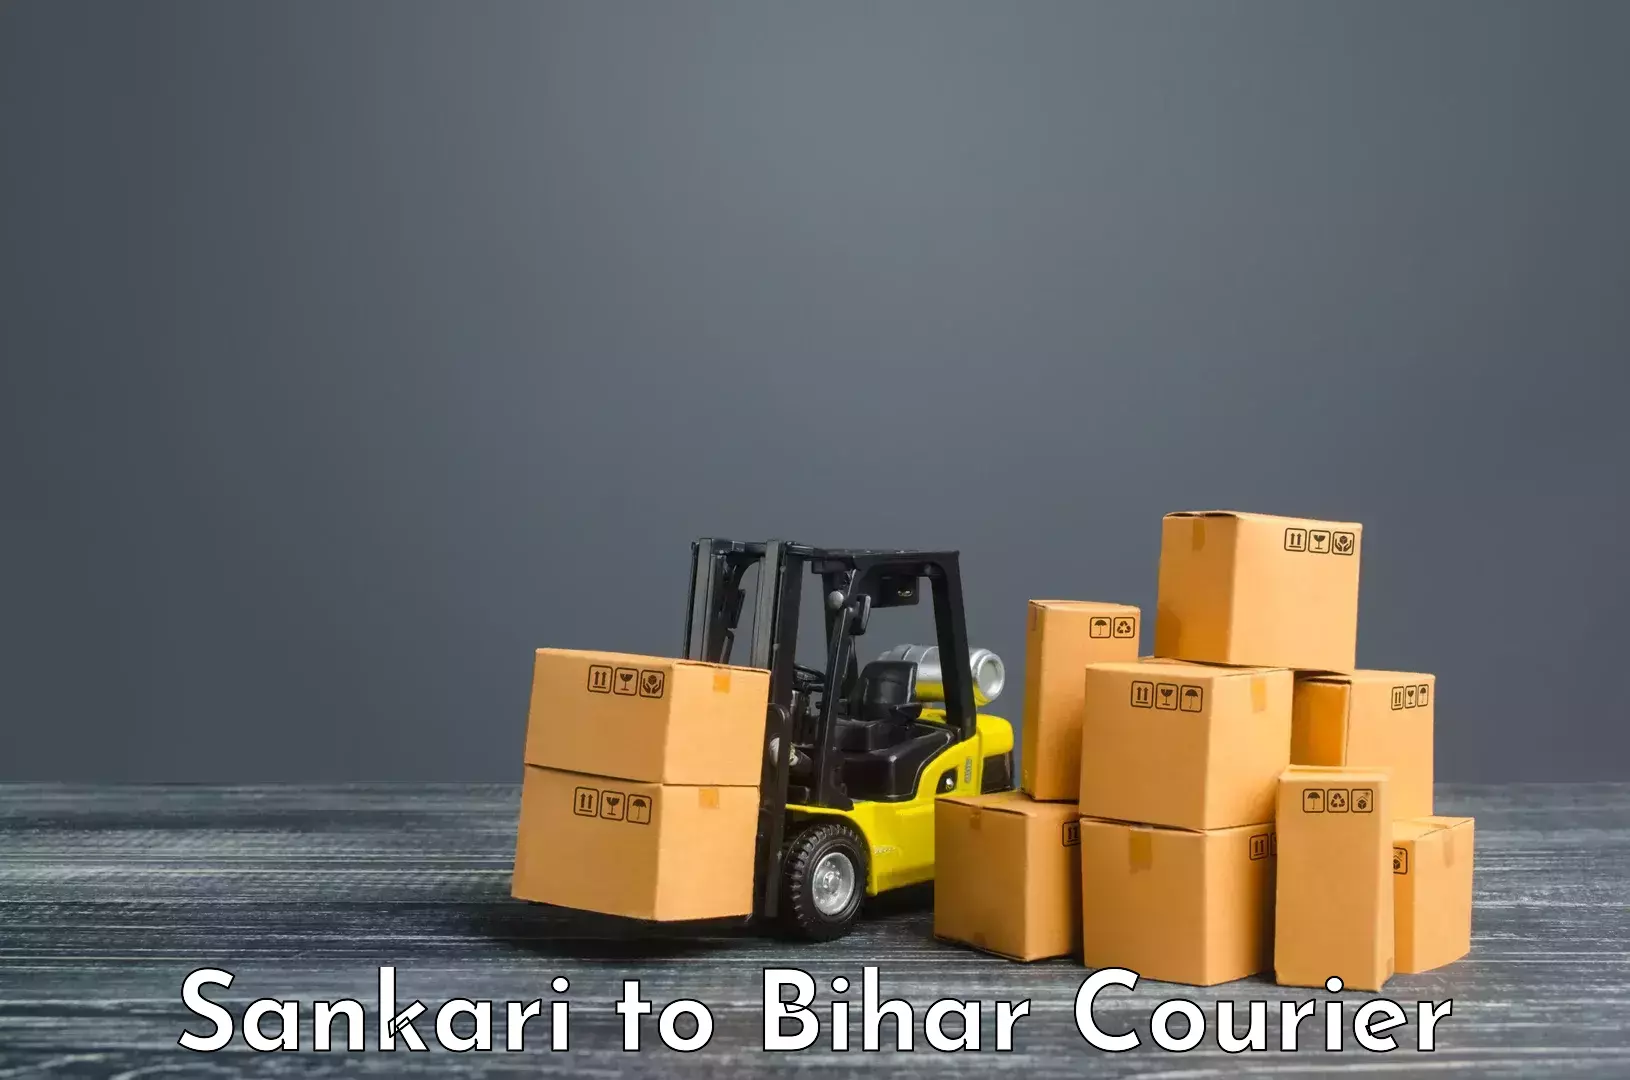 Courier service partnerships Sankari to Bihar